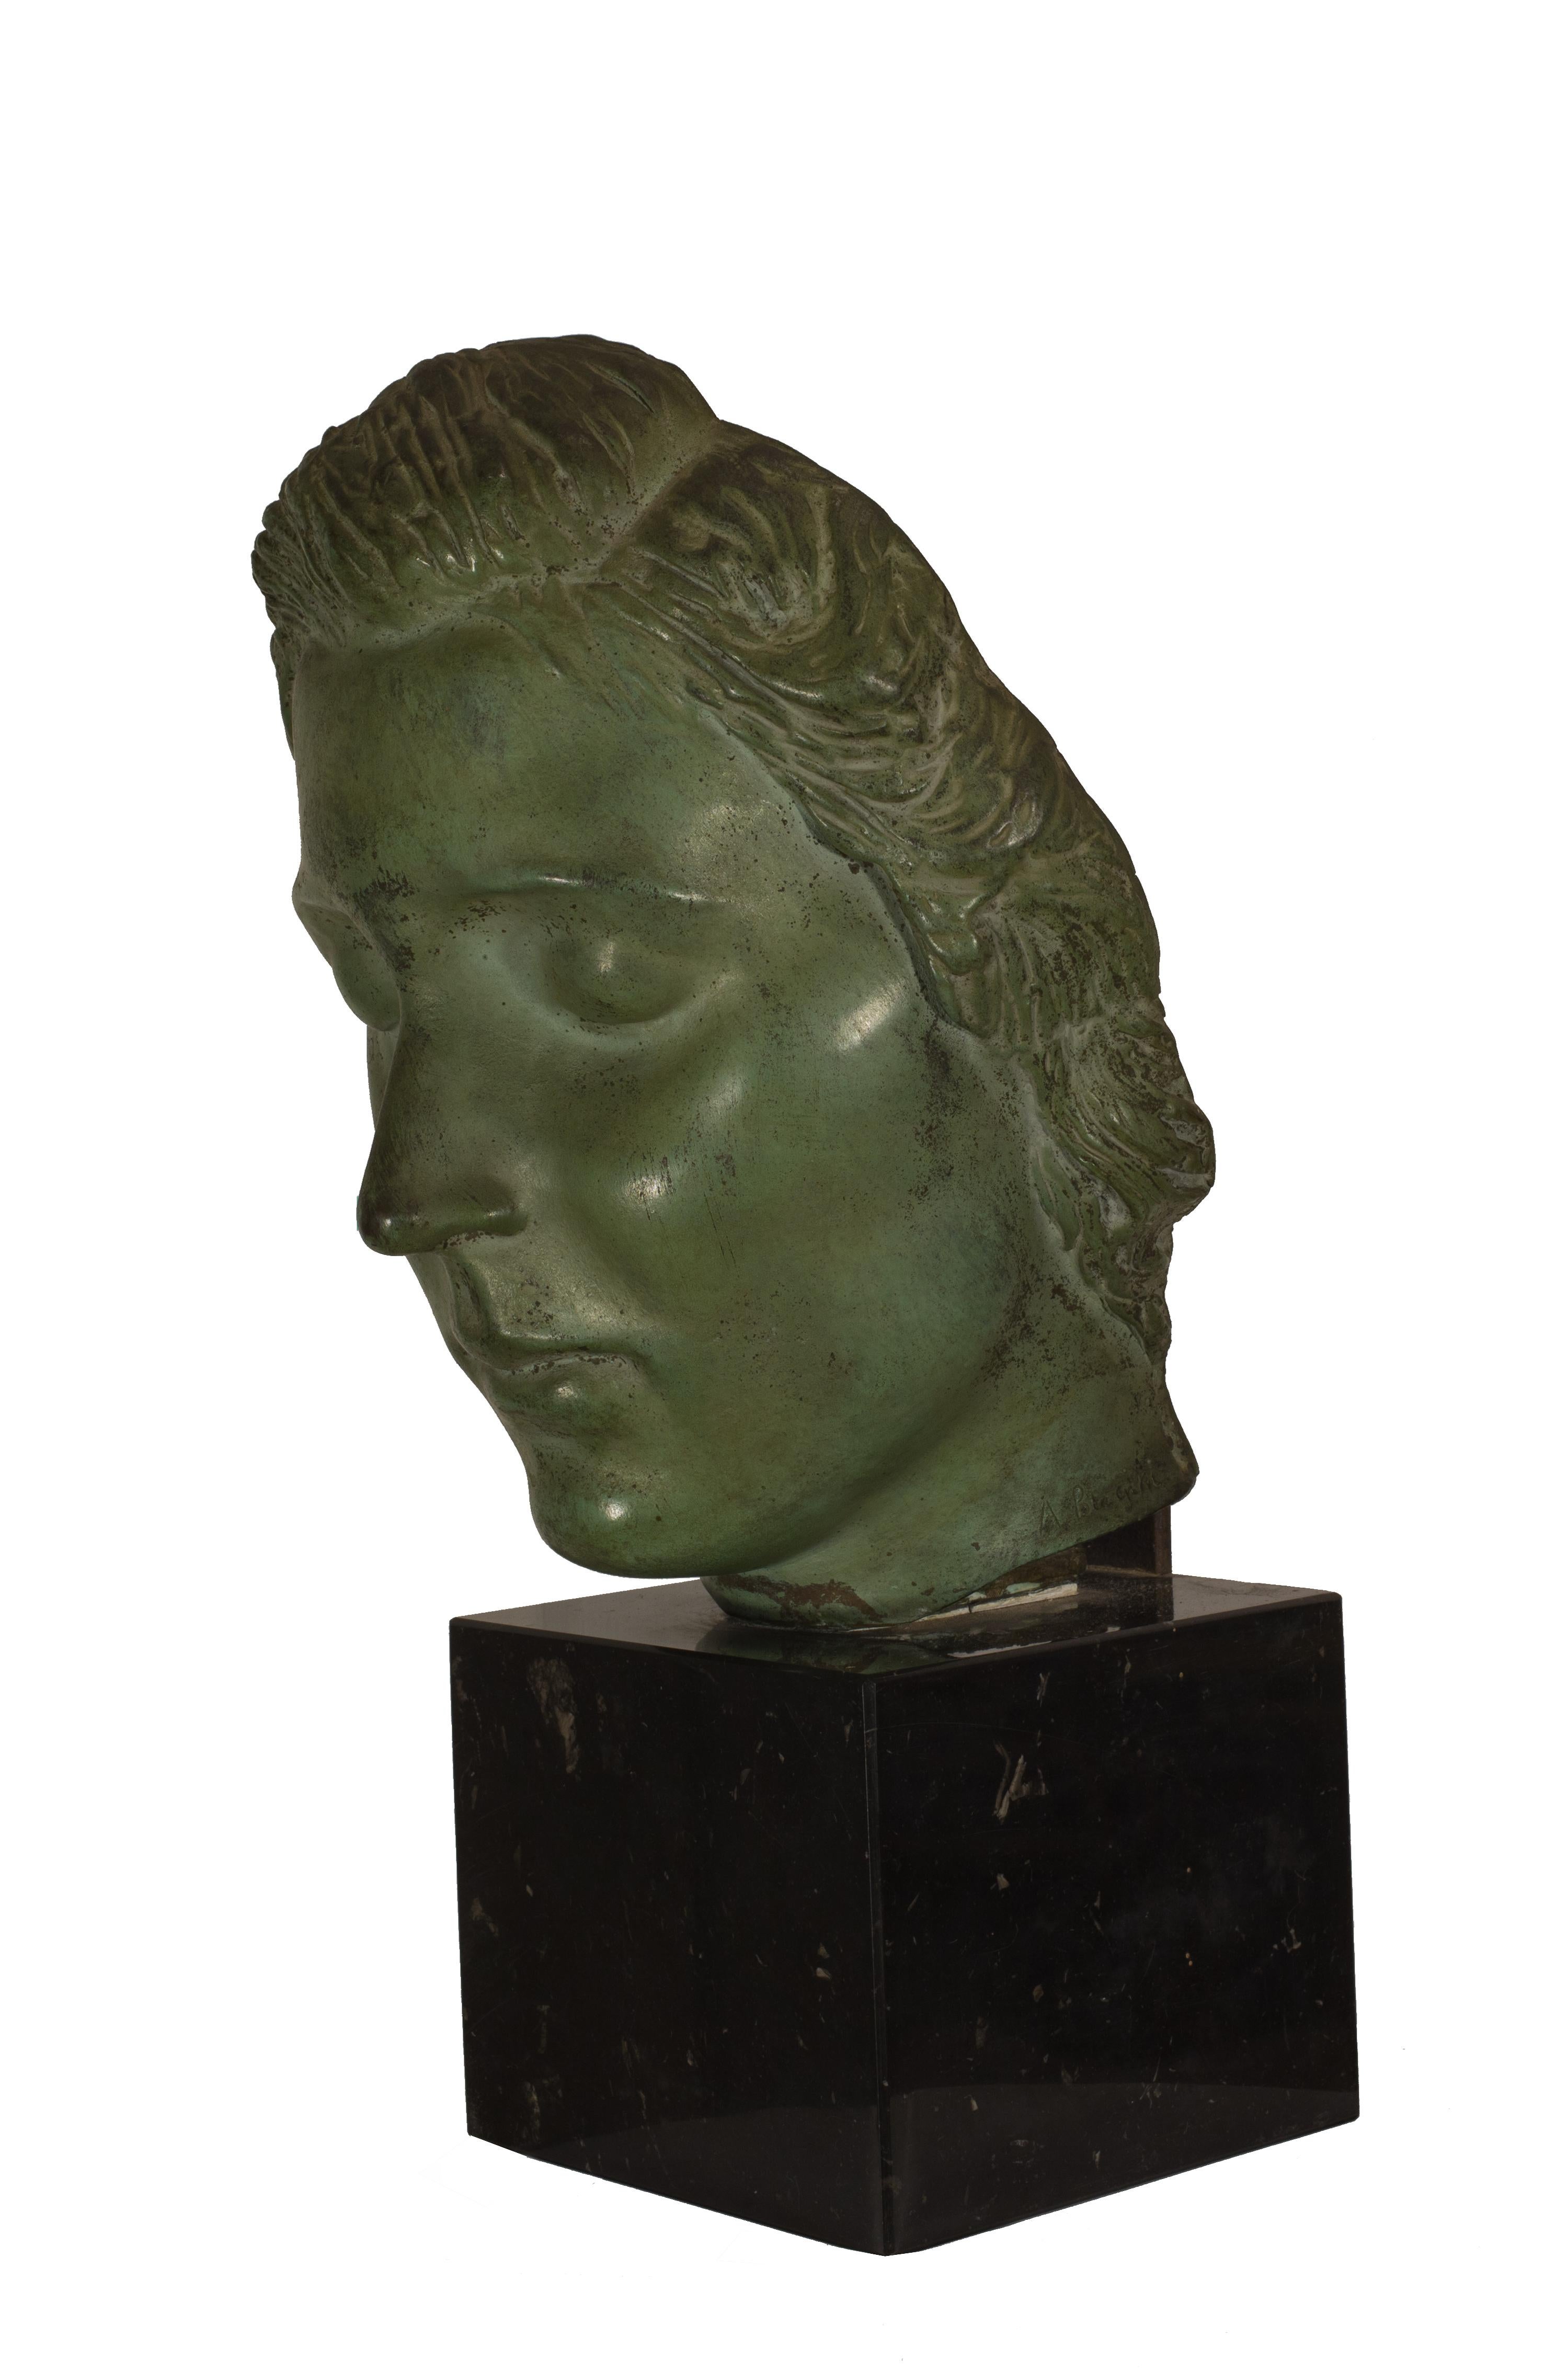 Alfredo Biagini (Rome 1886 - 1952), Female Face

Bronze sculpture 23 x 17 x 21 cm signed at bottom.